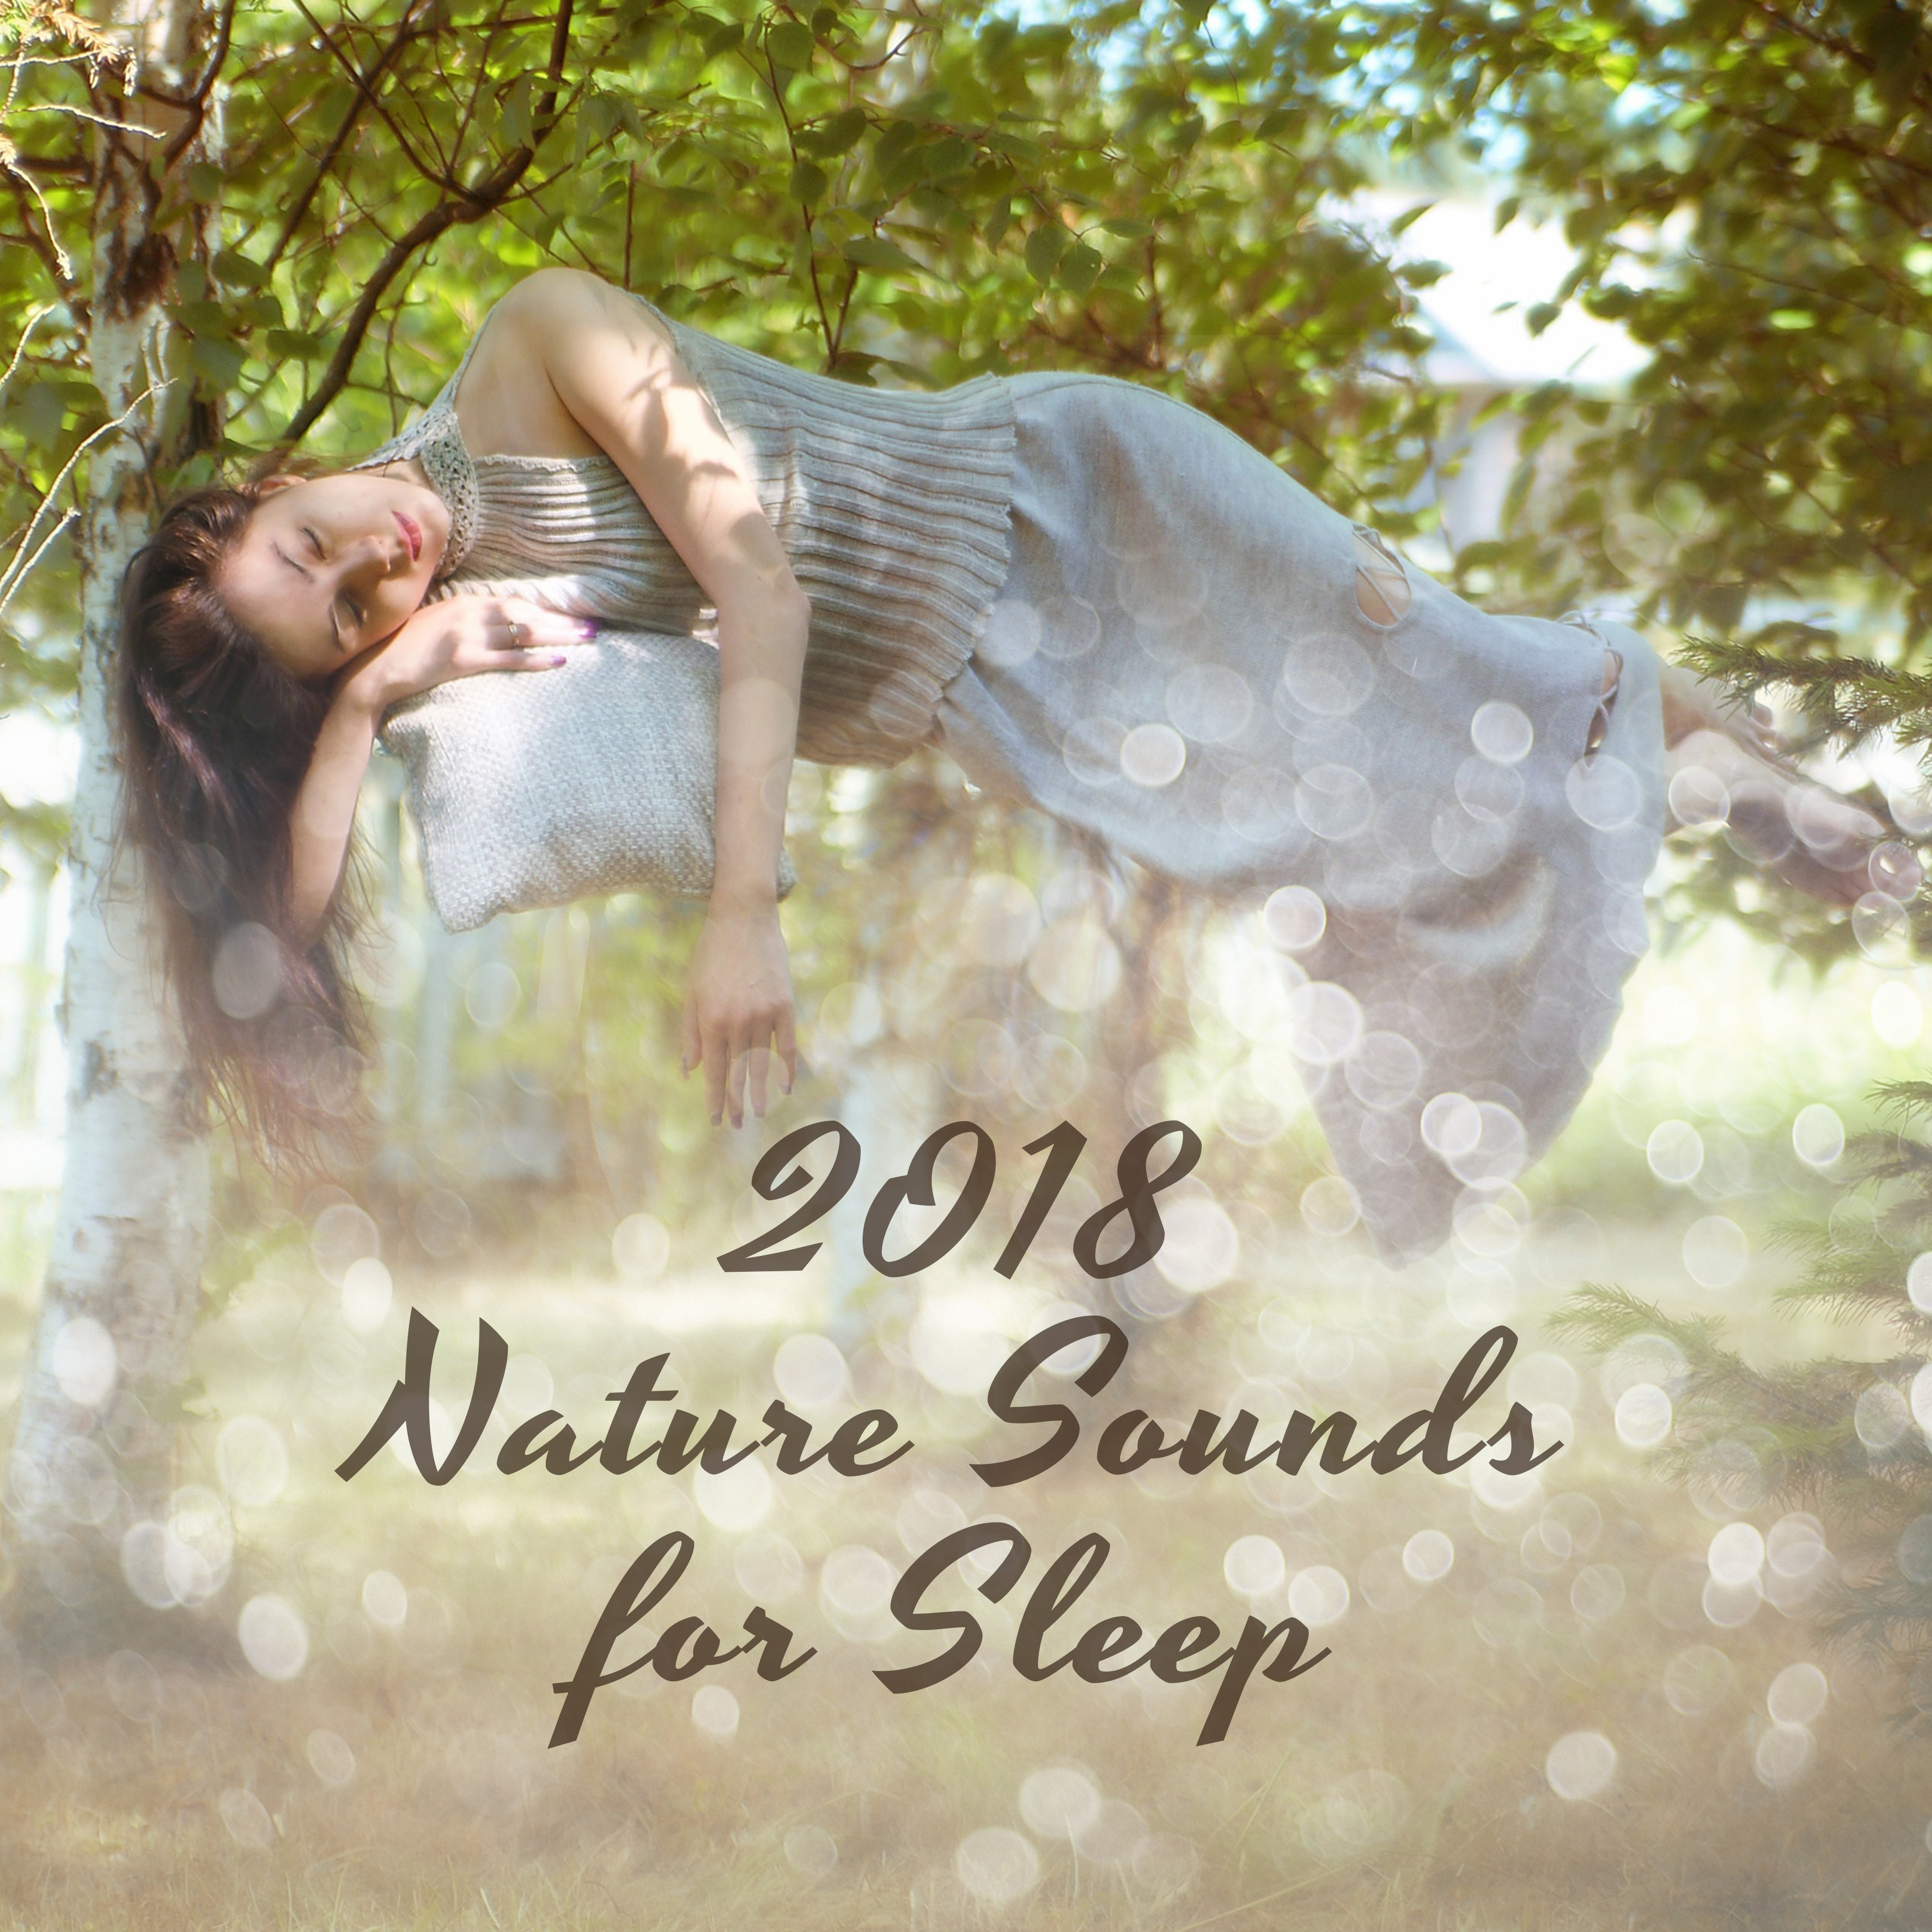 2018 Nature Sounds for Sleep